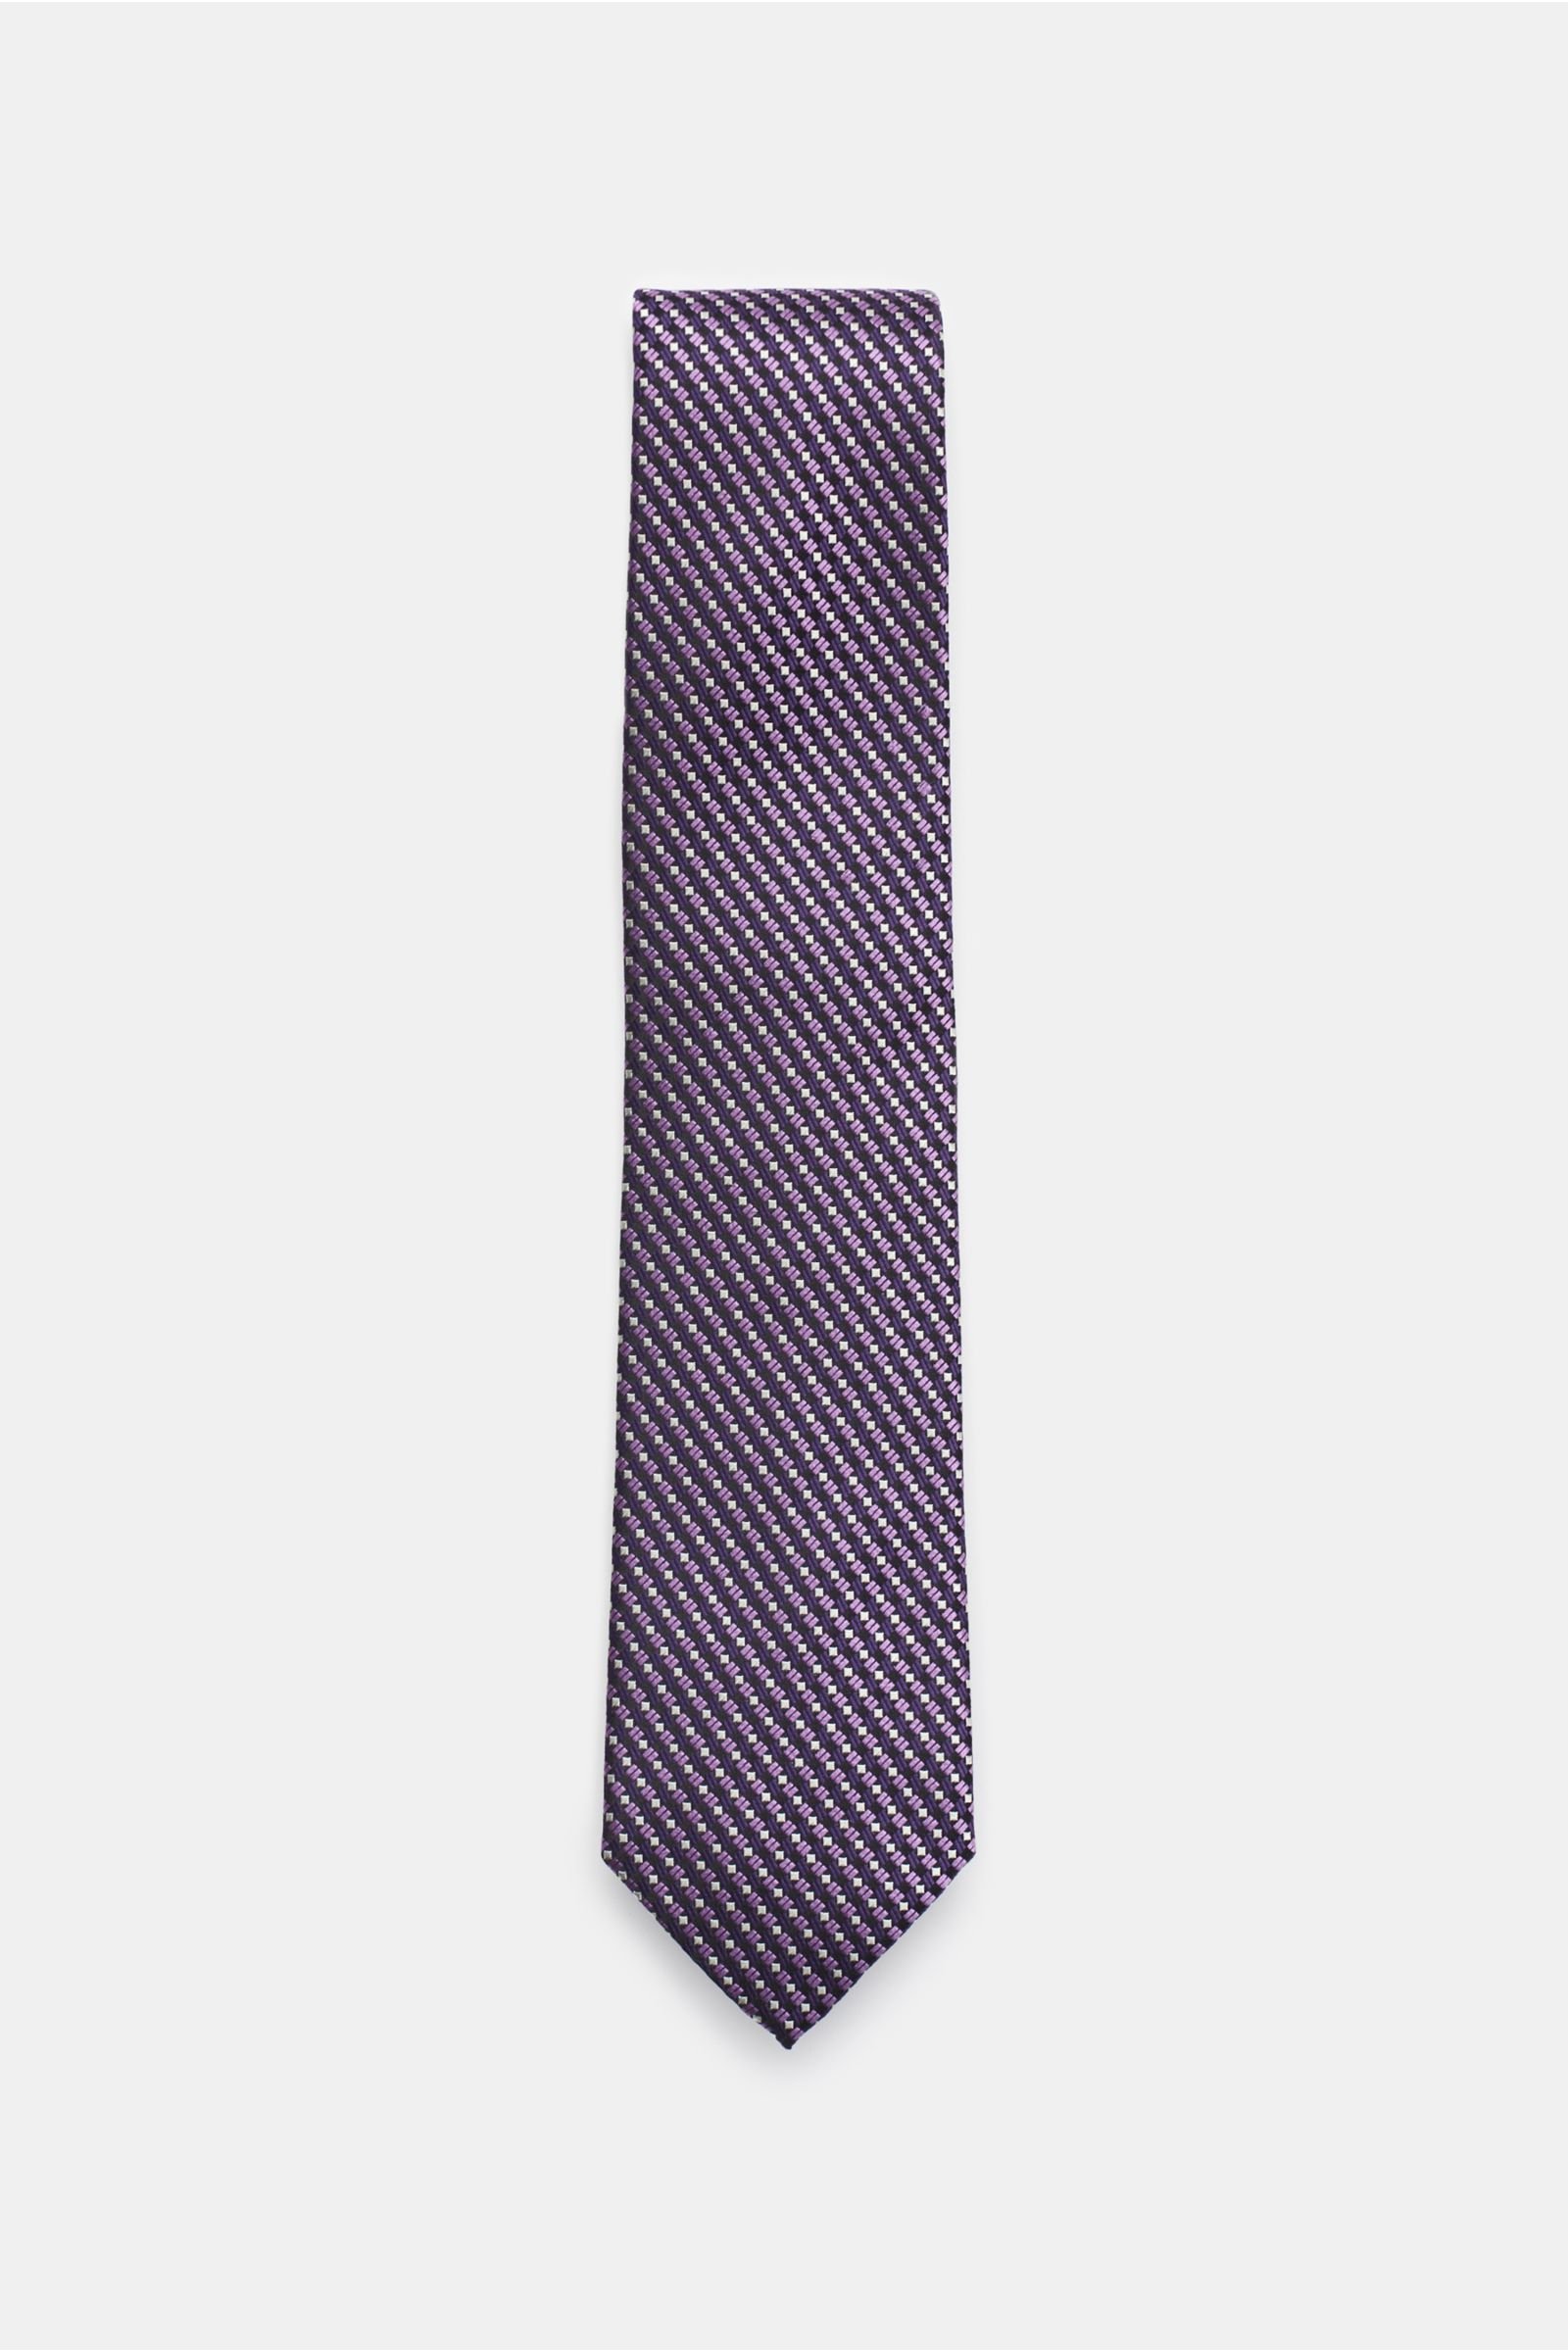 Silk tie purple/black patterned